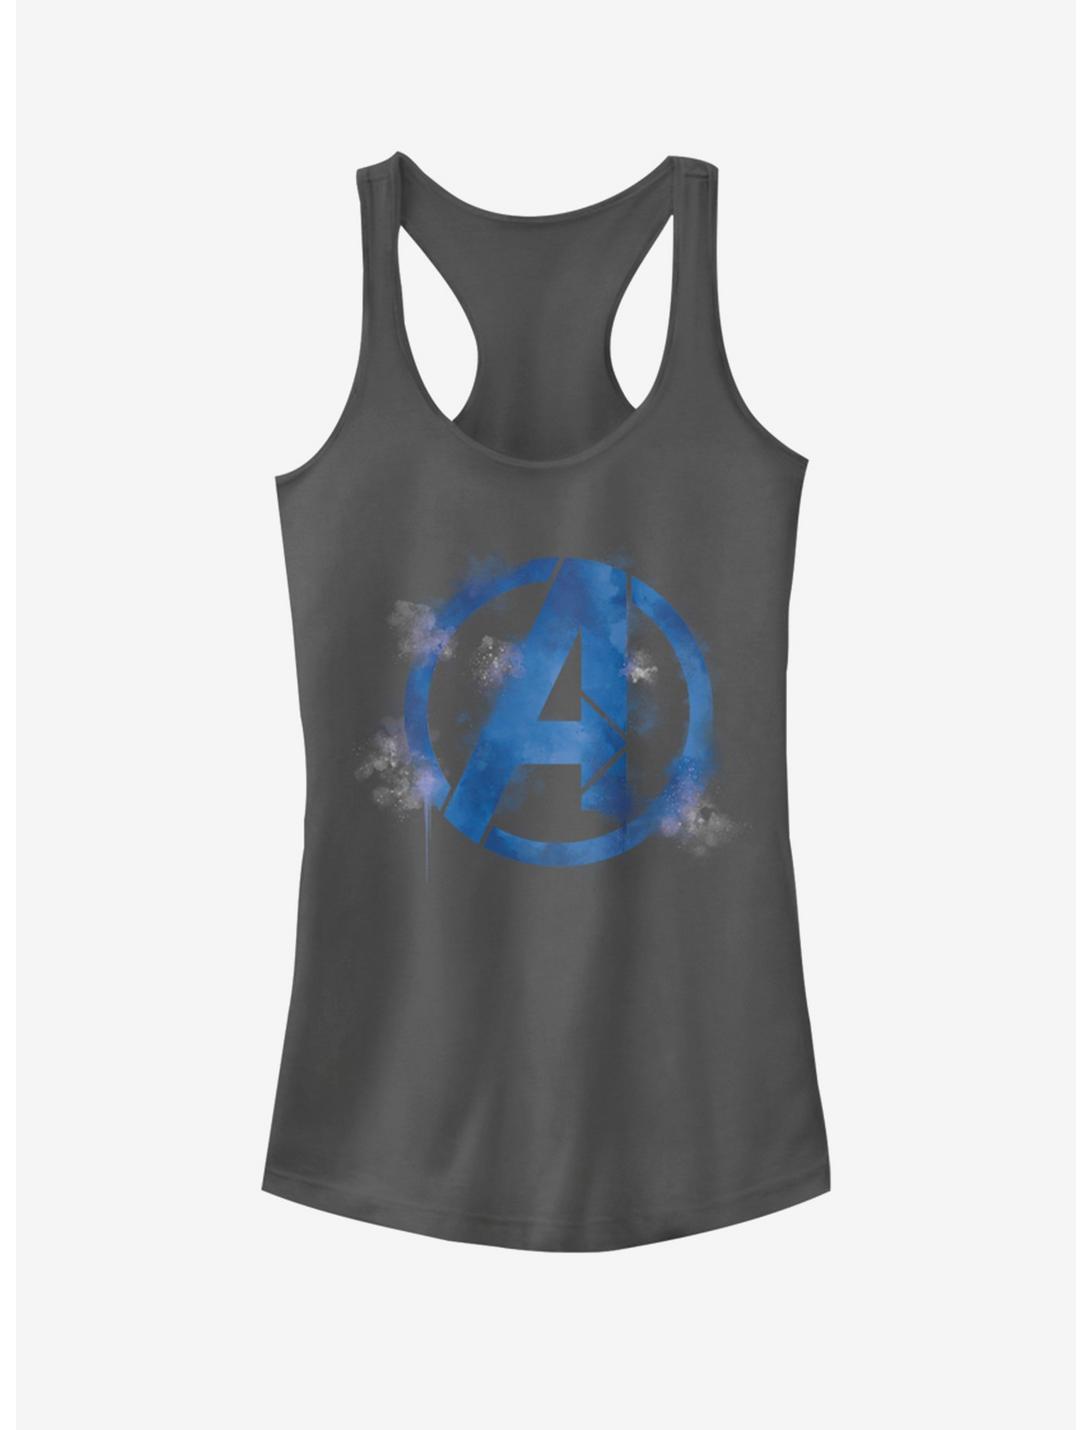 Marvel Avengers: Endgame Avengers Spray Logo Girls Charcoal Grey Tank Top, CHARCOAL, hi-res